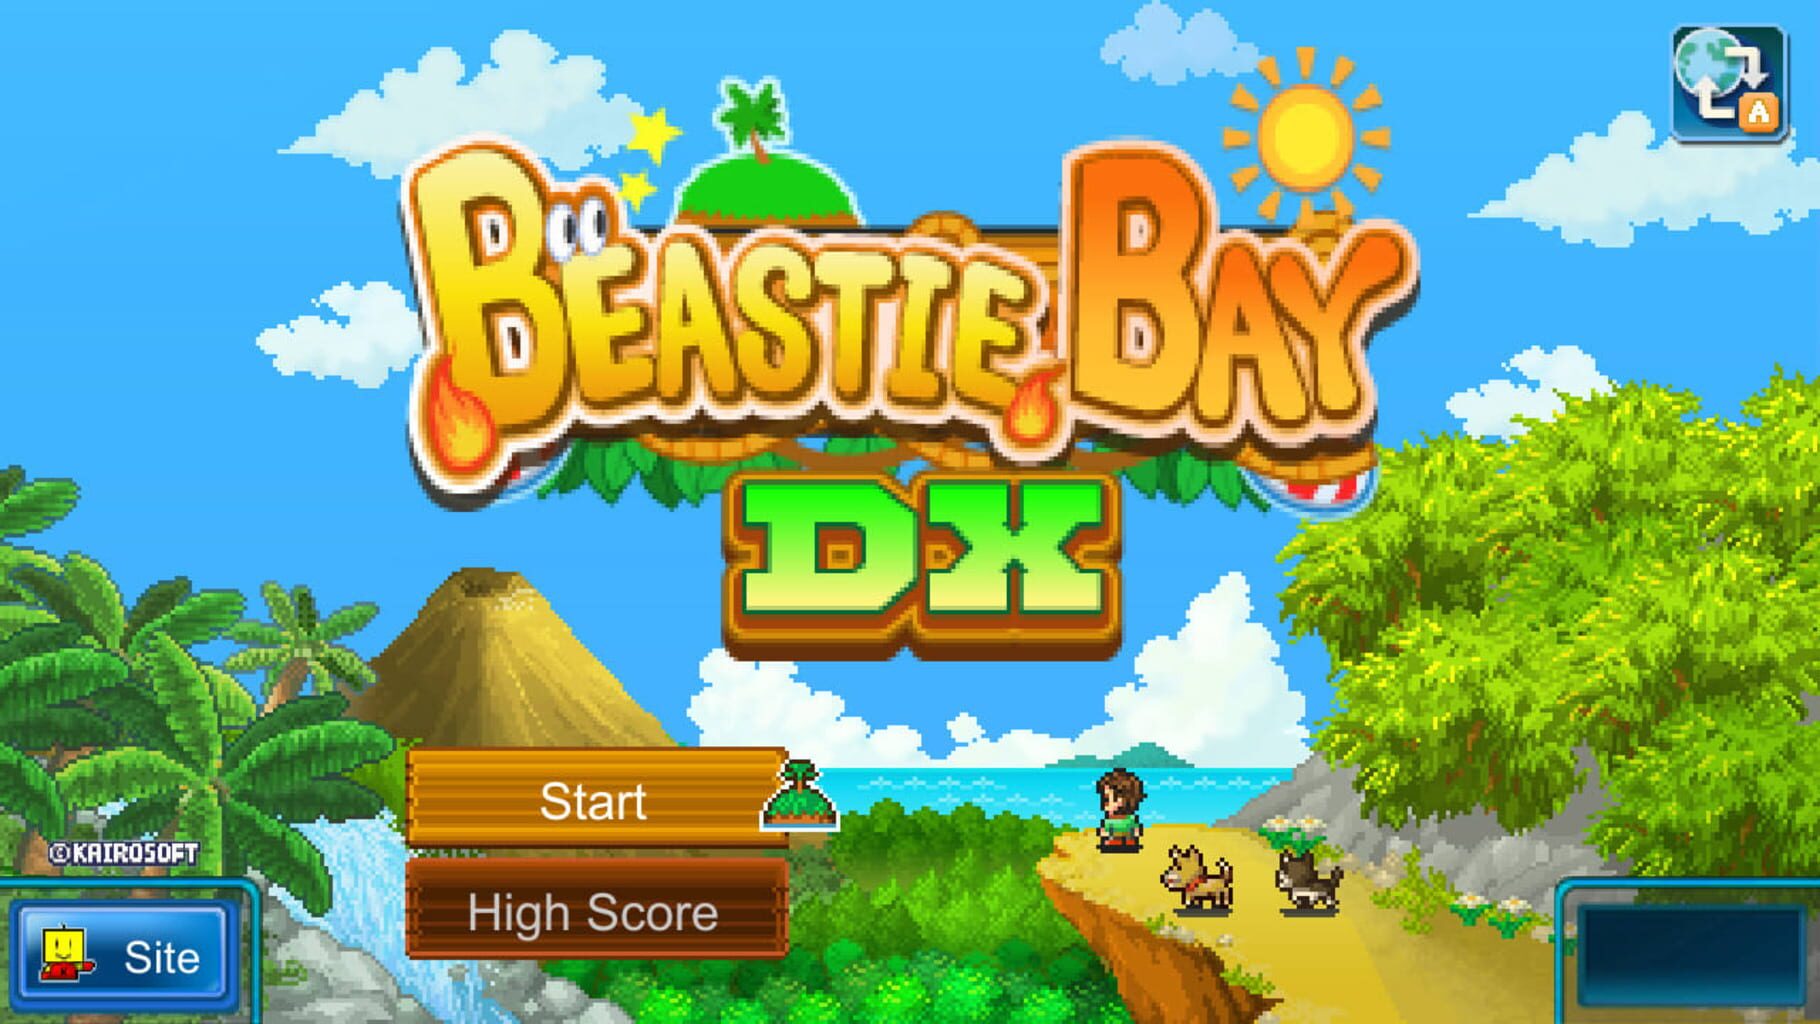 Beastie Bay DX screenshot